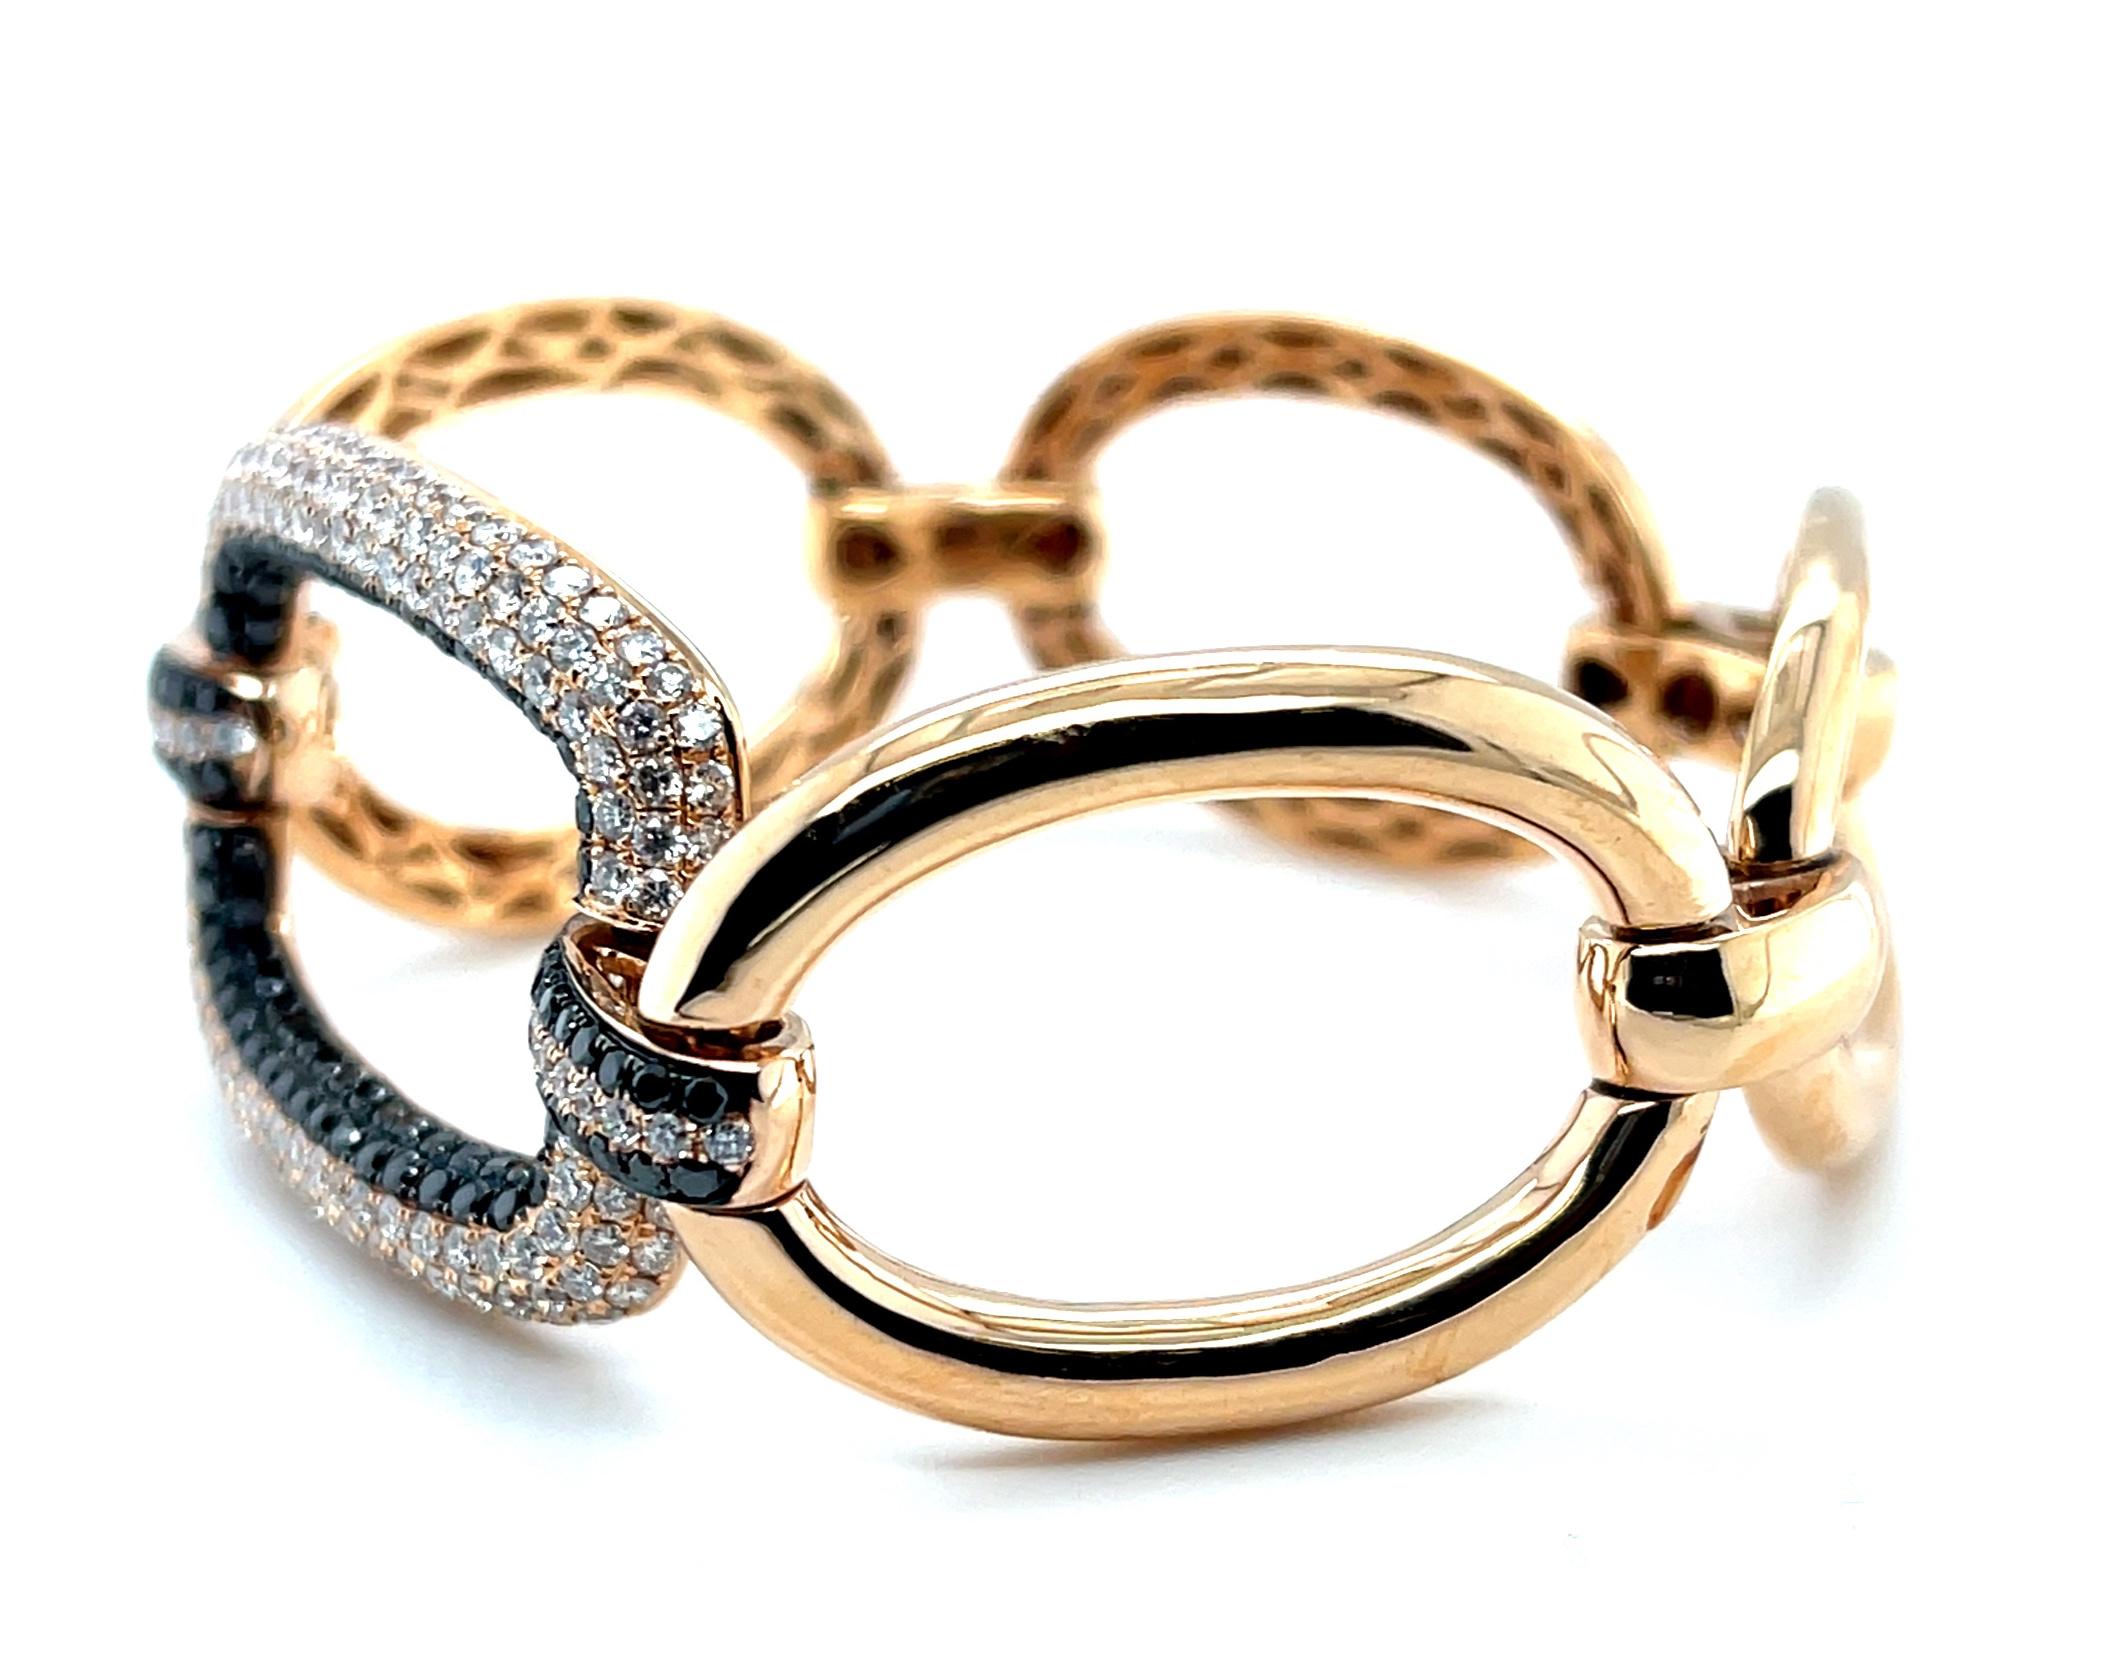 Black and White Diamond Link Bracelet in Rose Gold, 3.52 Carat Total For Sale 2